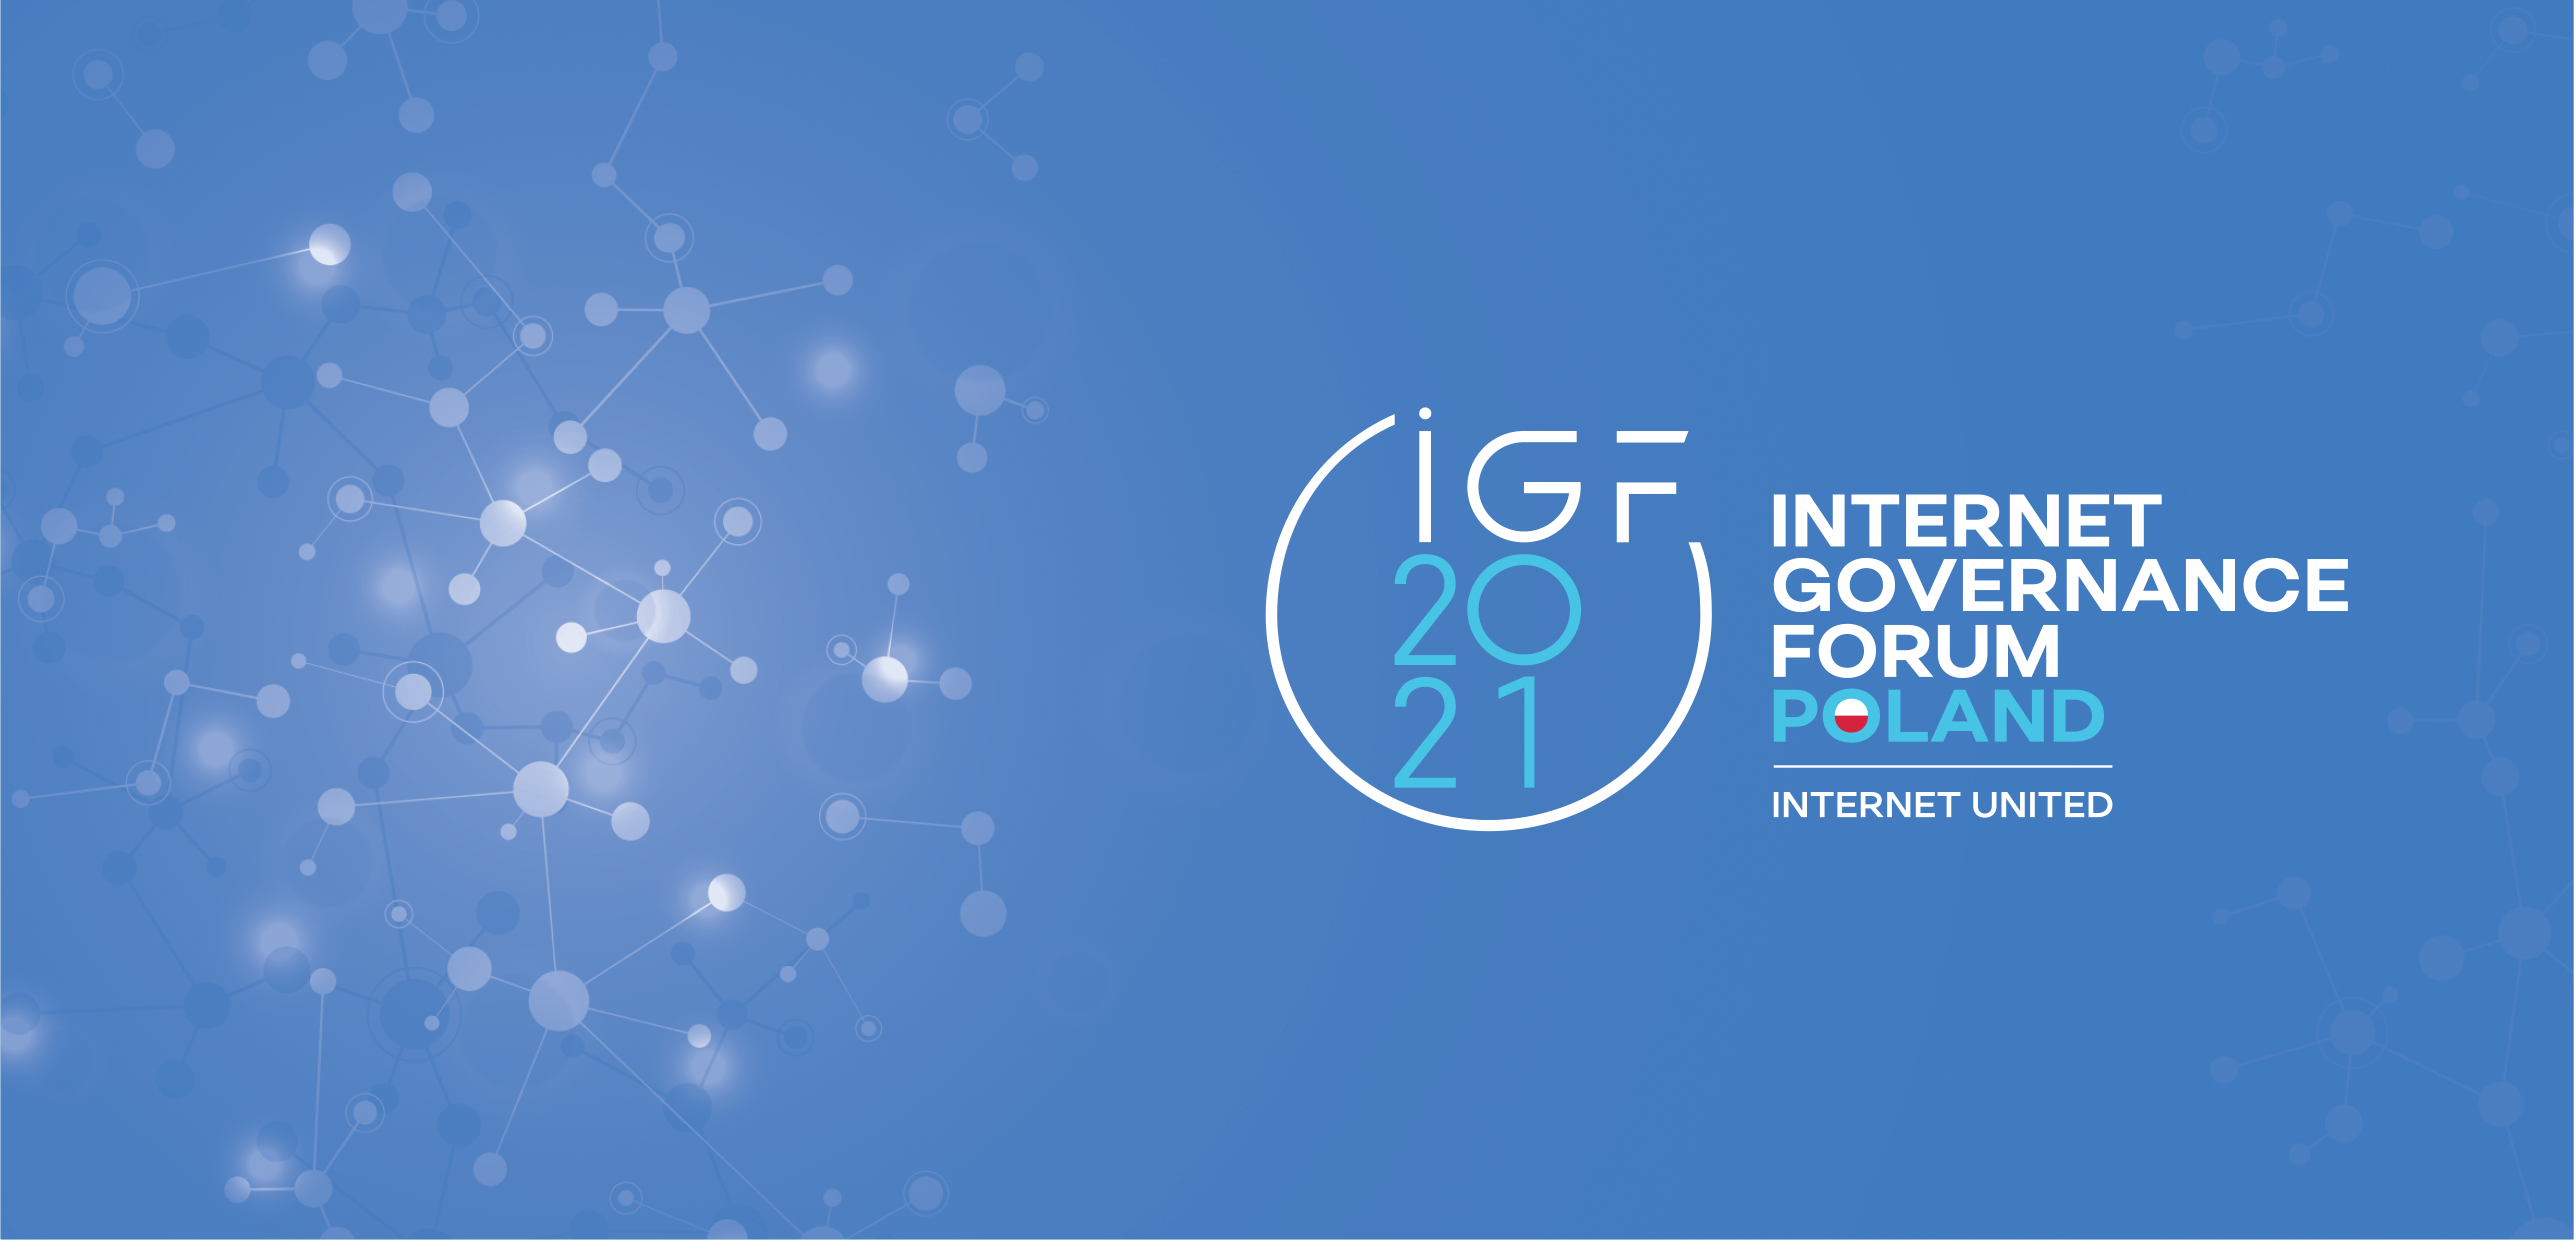 Na niebieskim tle logotyp IGF 2021. Internet Governance Forum Poland. Internet United.